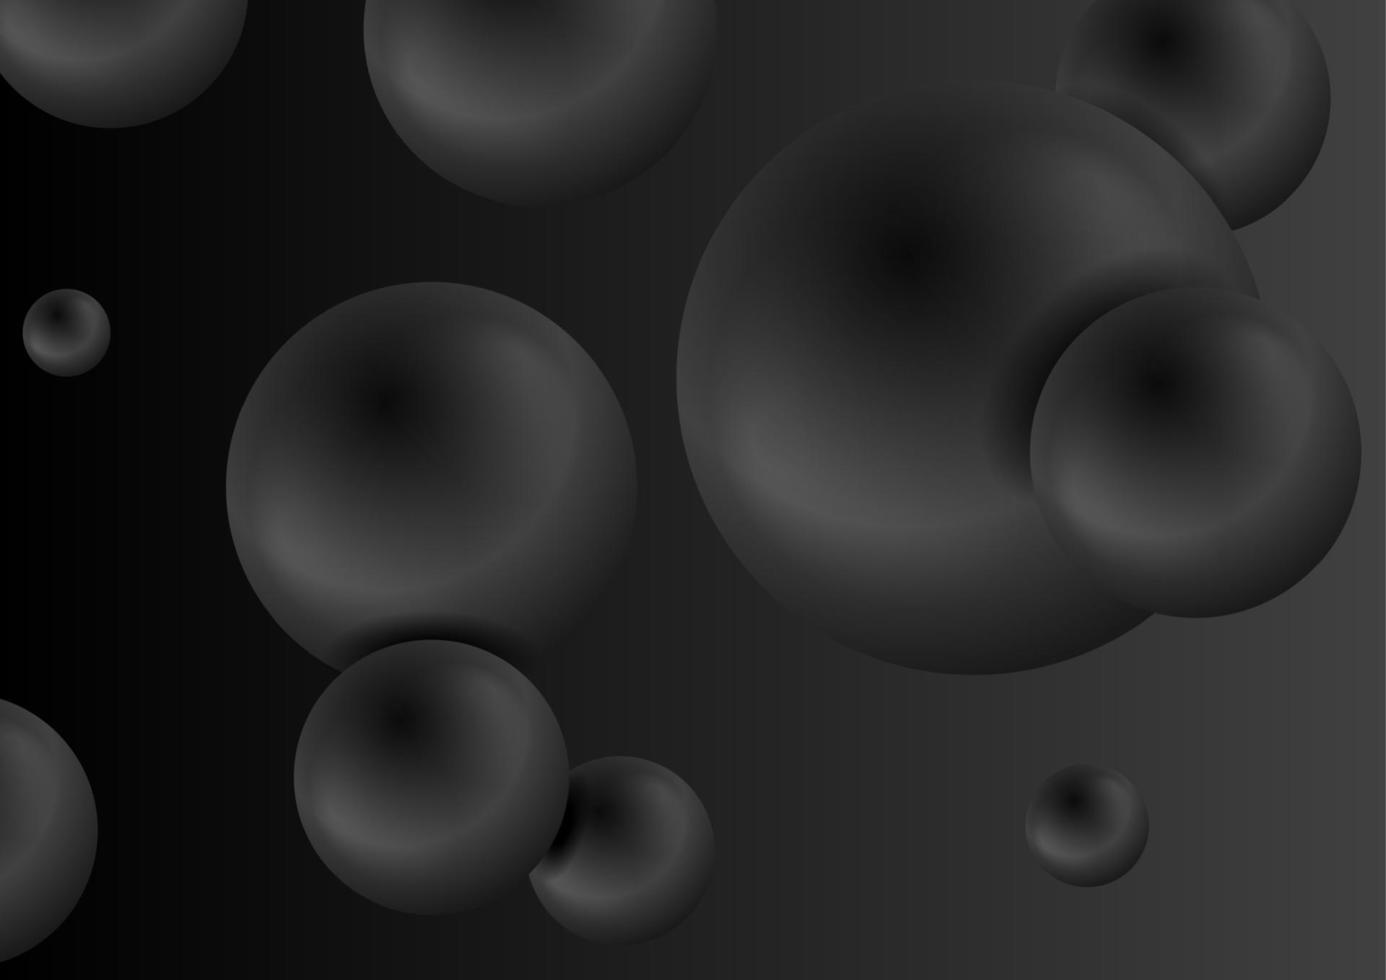 Abstract black minimal futuristic 3d balls background vector